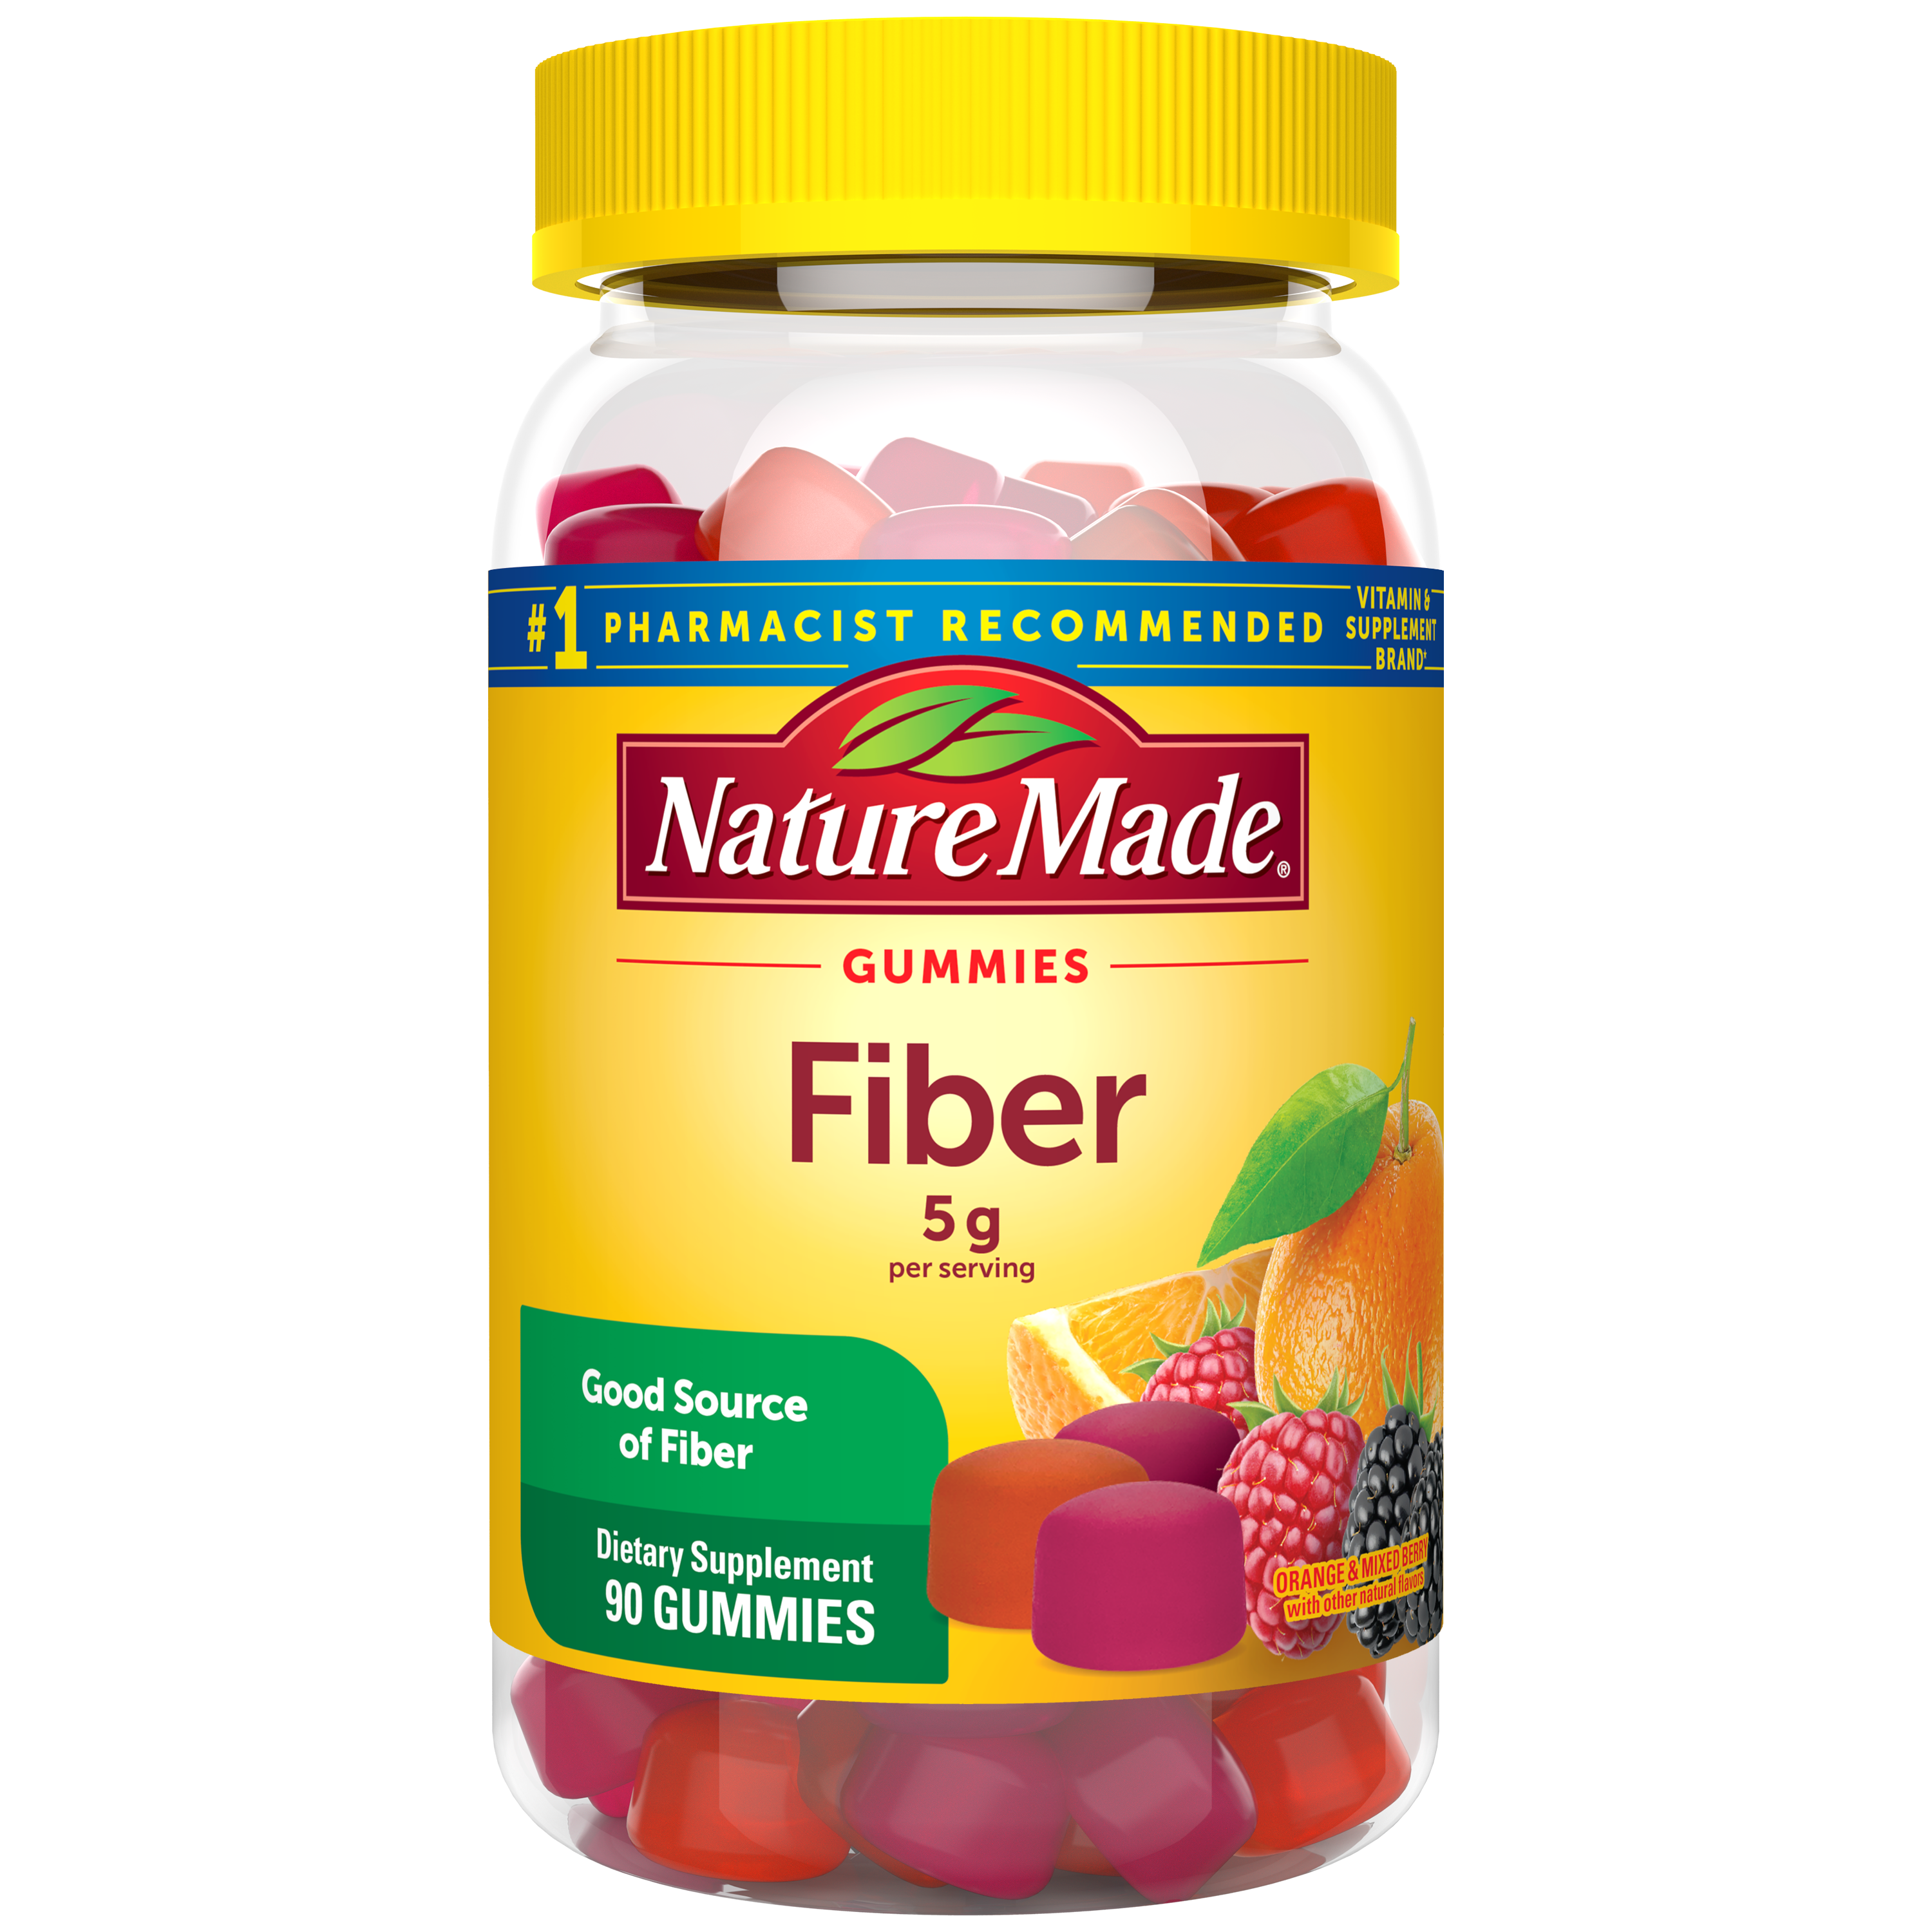 Fiber Choice Daily Prebiotic Fruity Bites (Label)